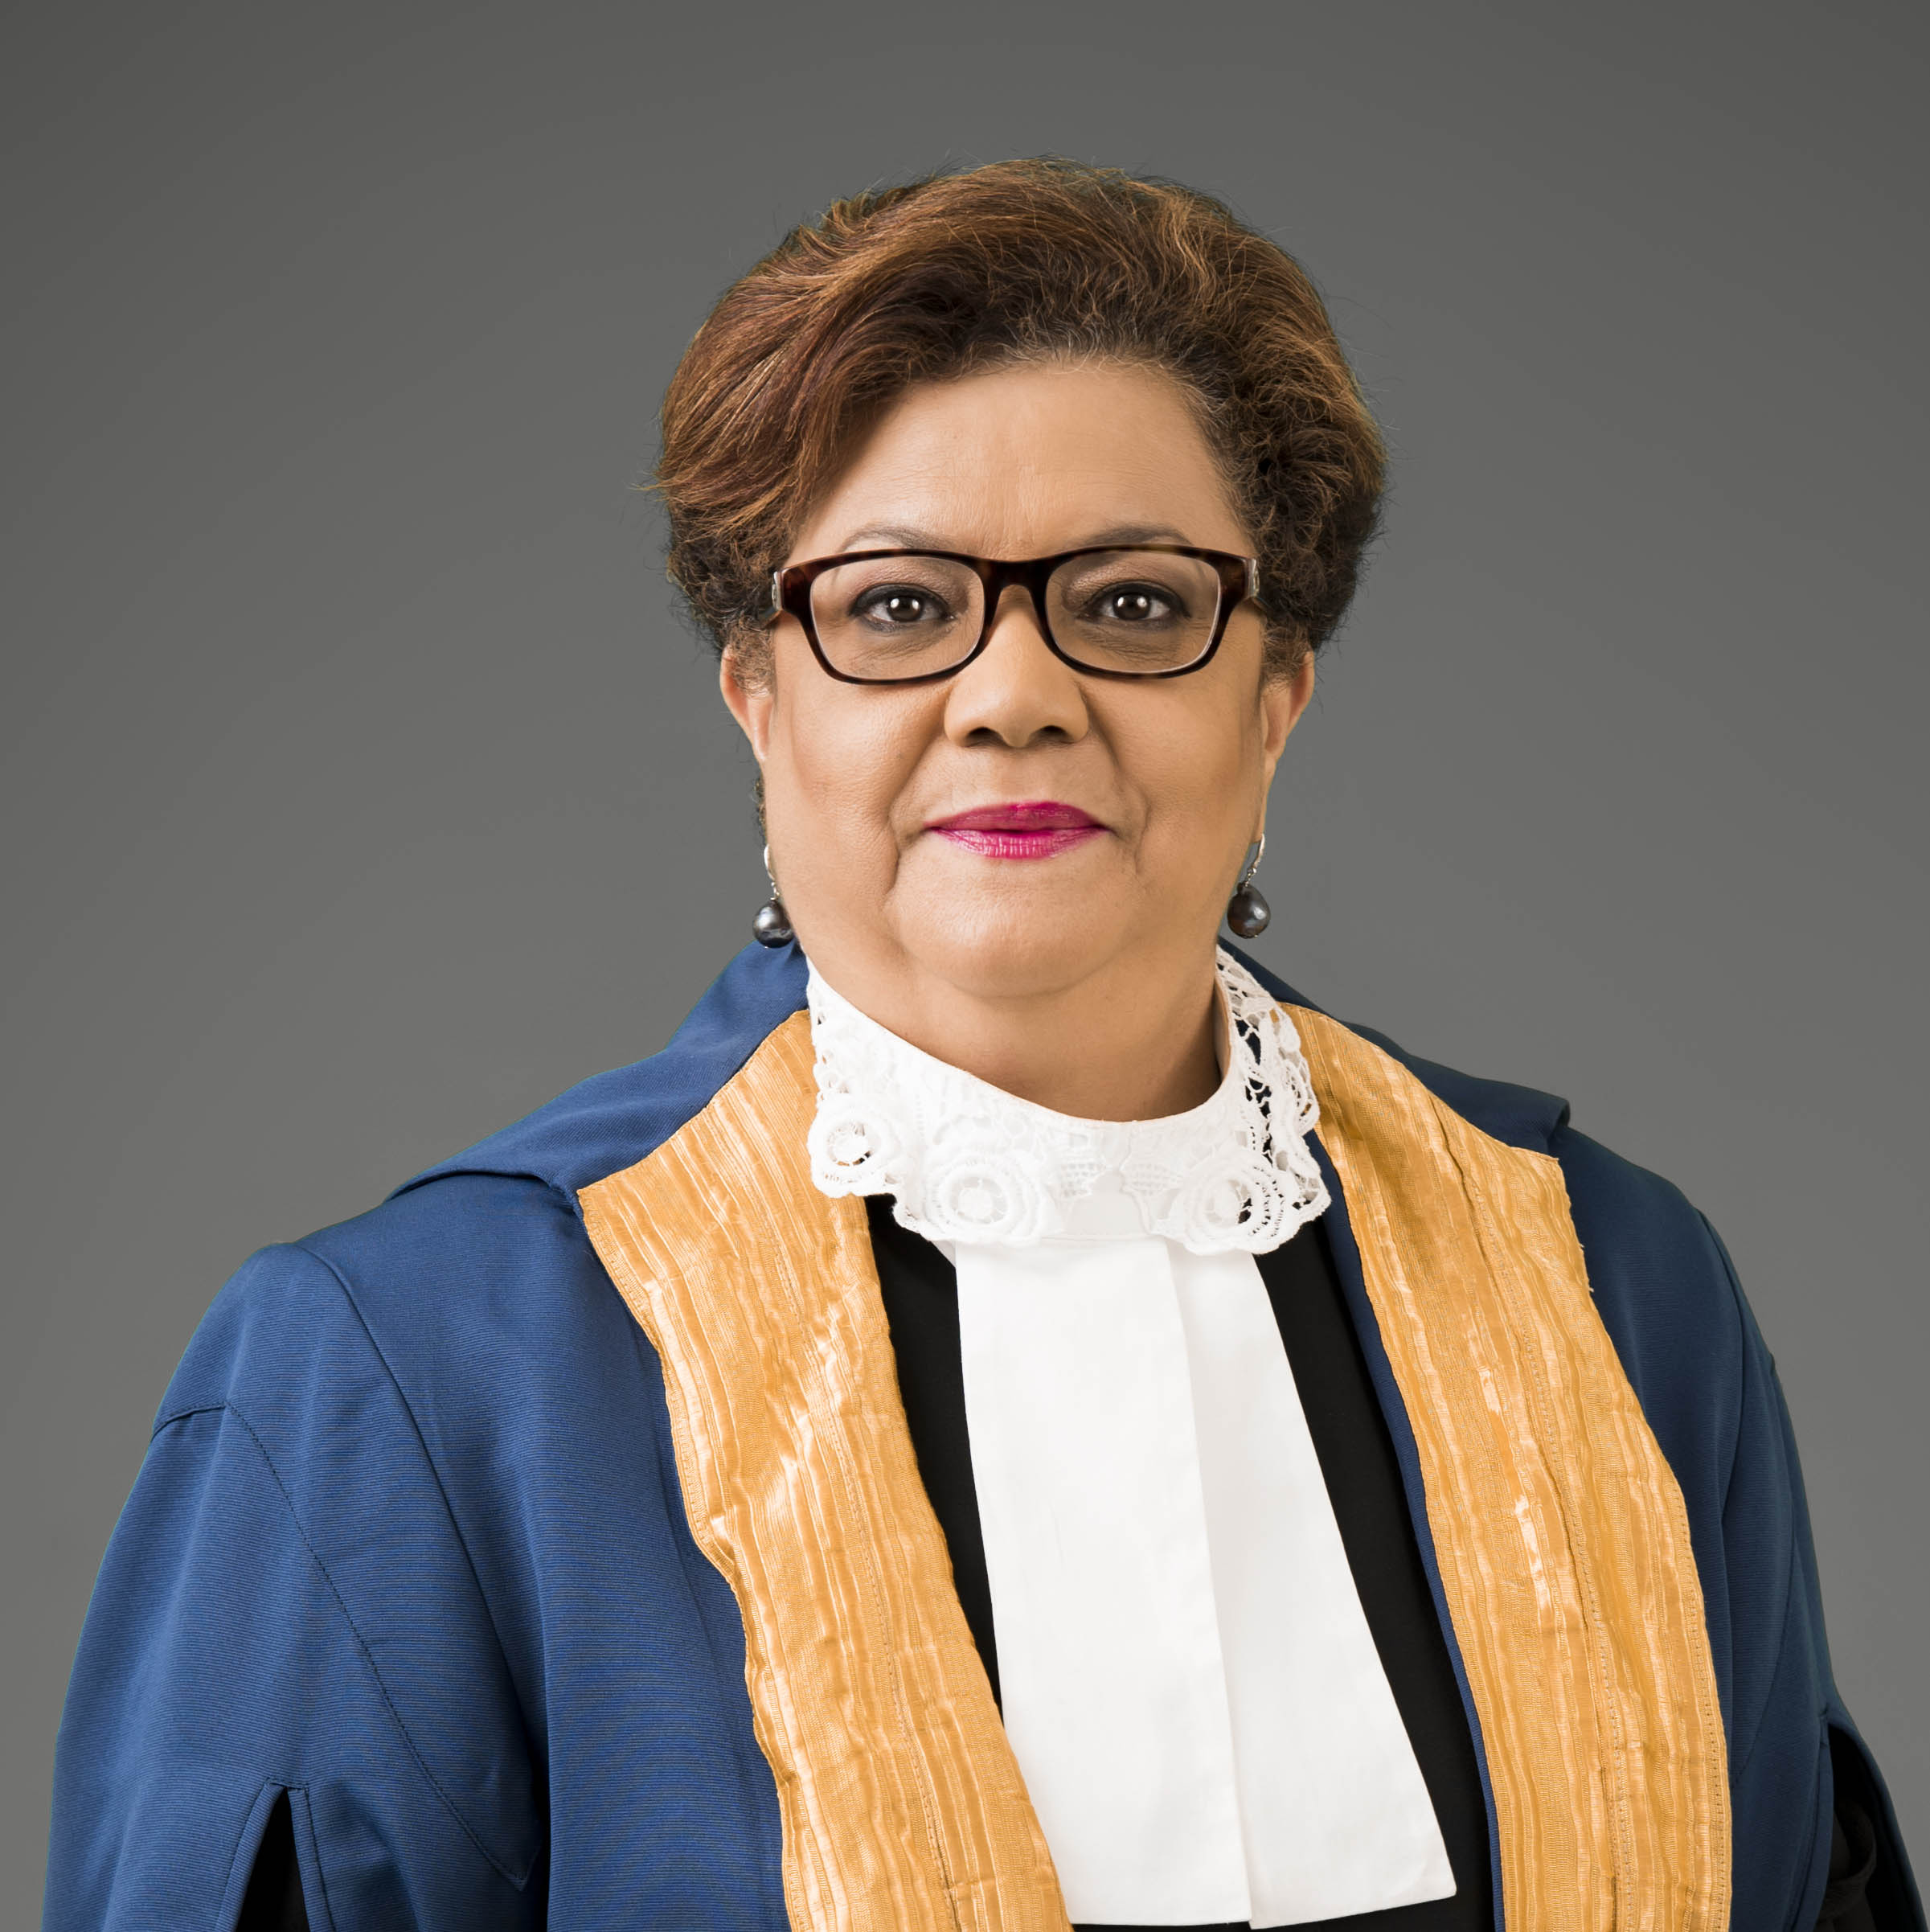 The Honourable Mme. Justice Maureen Rajnauth-Lee